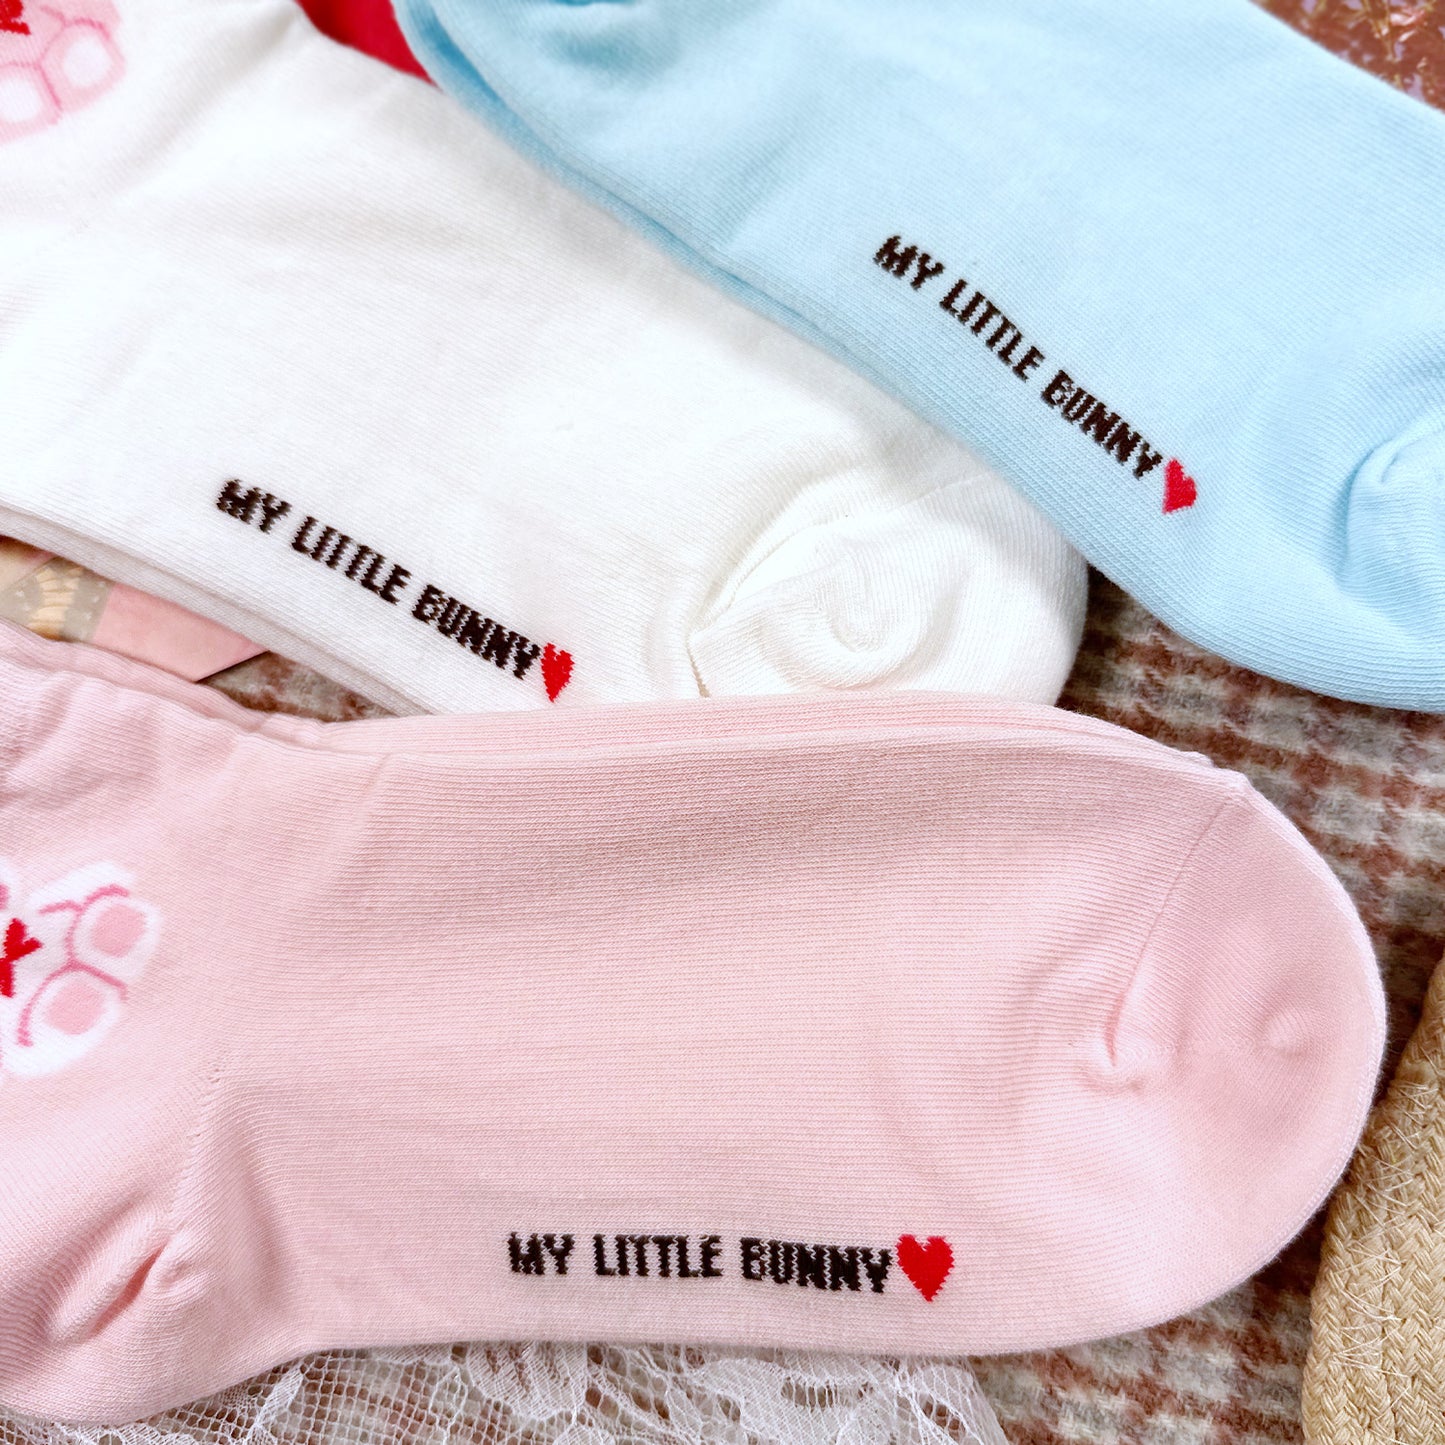 Women's Crew Little Bunny Middle Socks